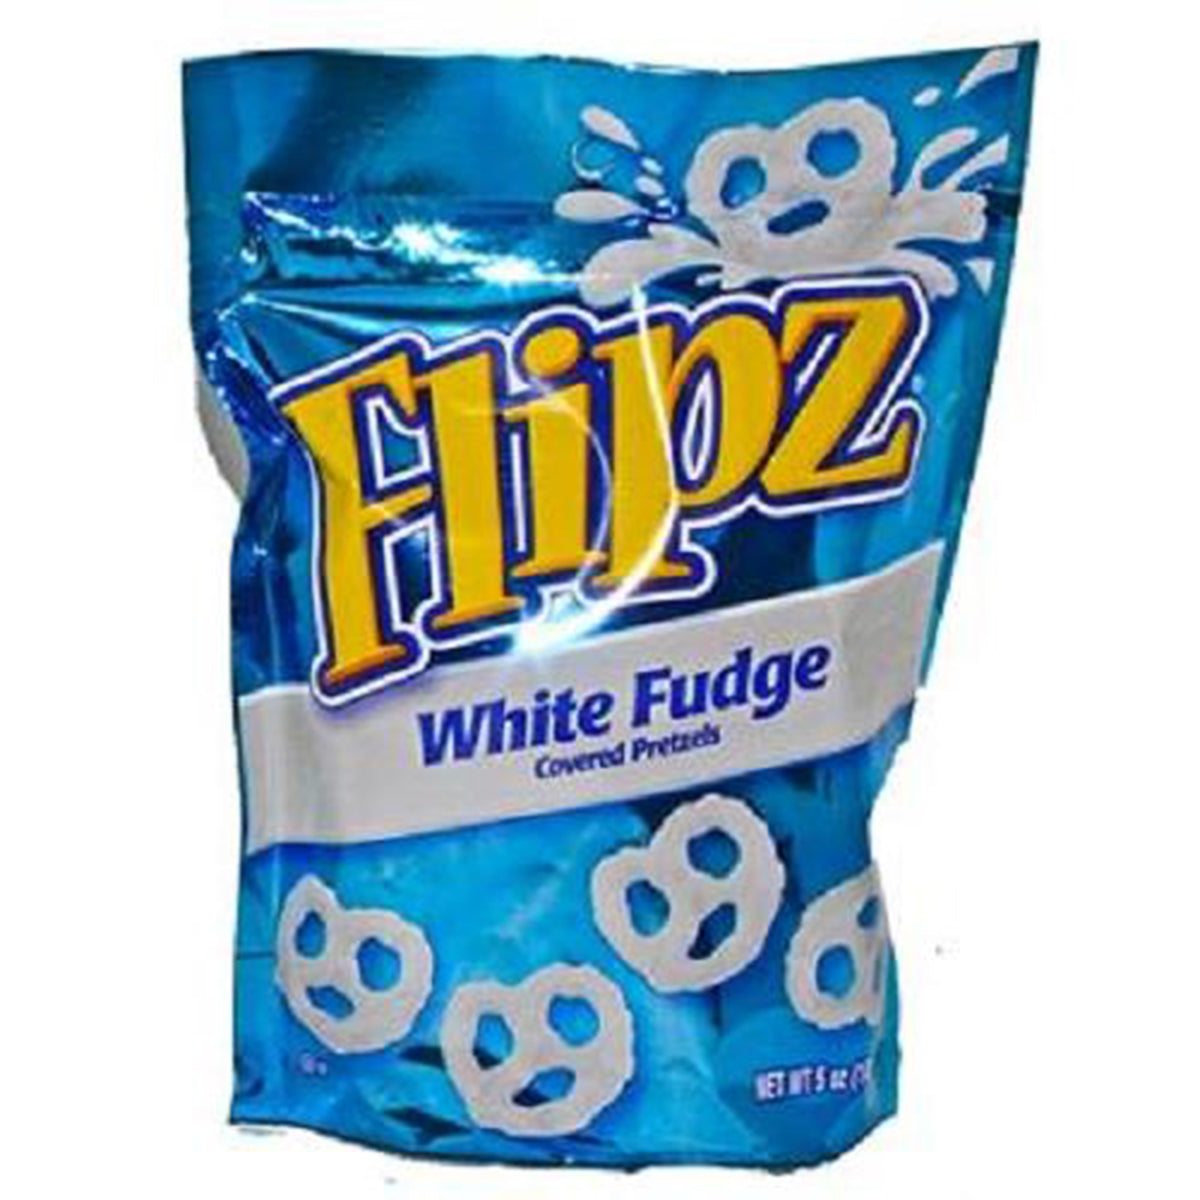 Product Of Flipz, White Fudge Covered Pretzels, Count 6 - Snacks / Grab Varieties & Flavors